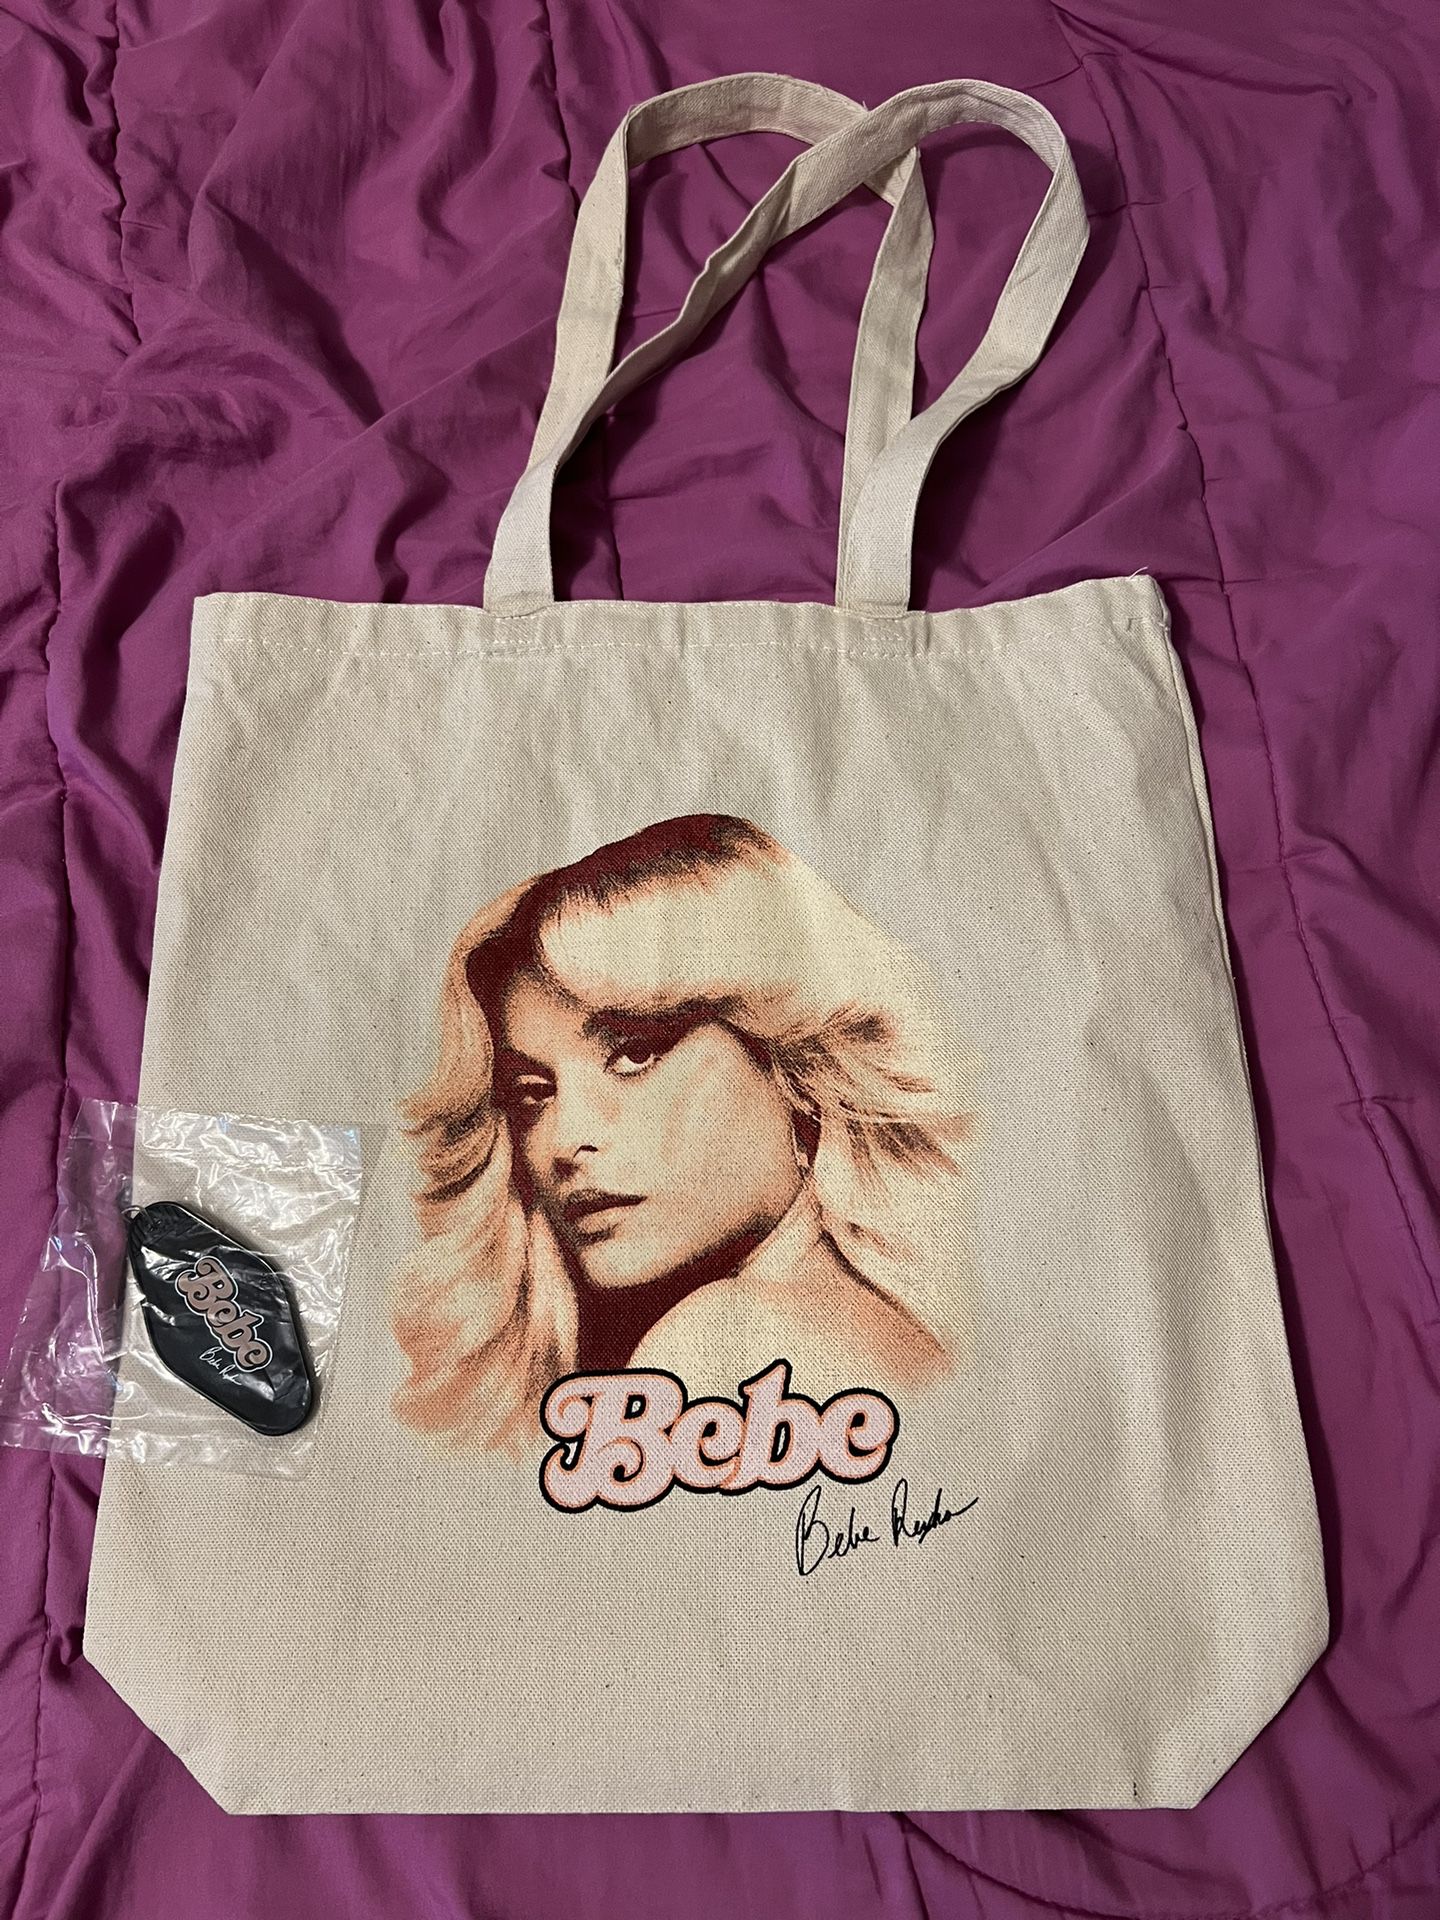 Bebe Rexha Bag And Keychain 